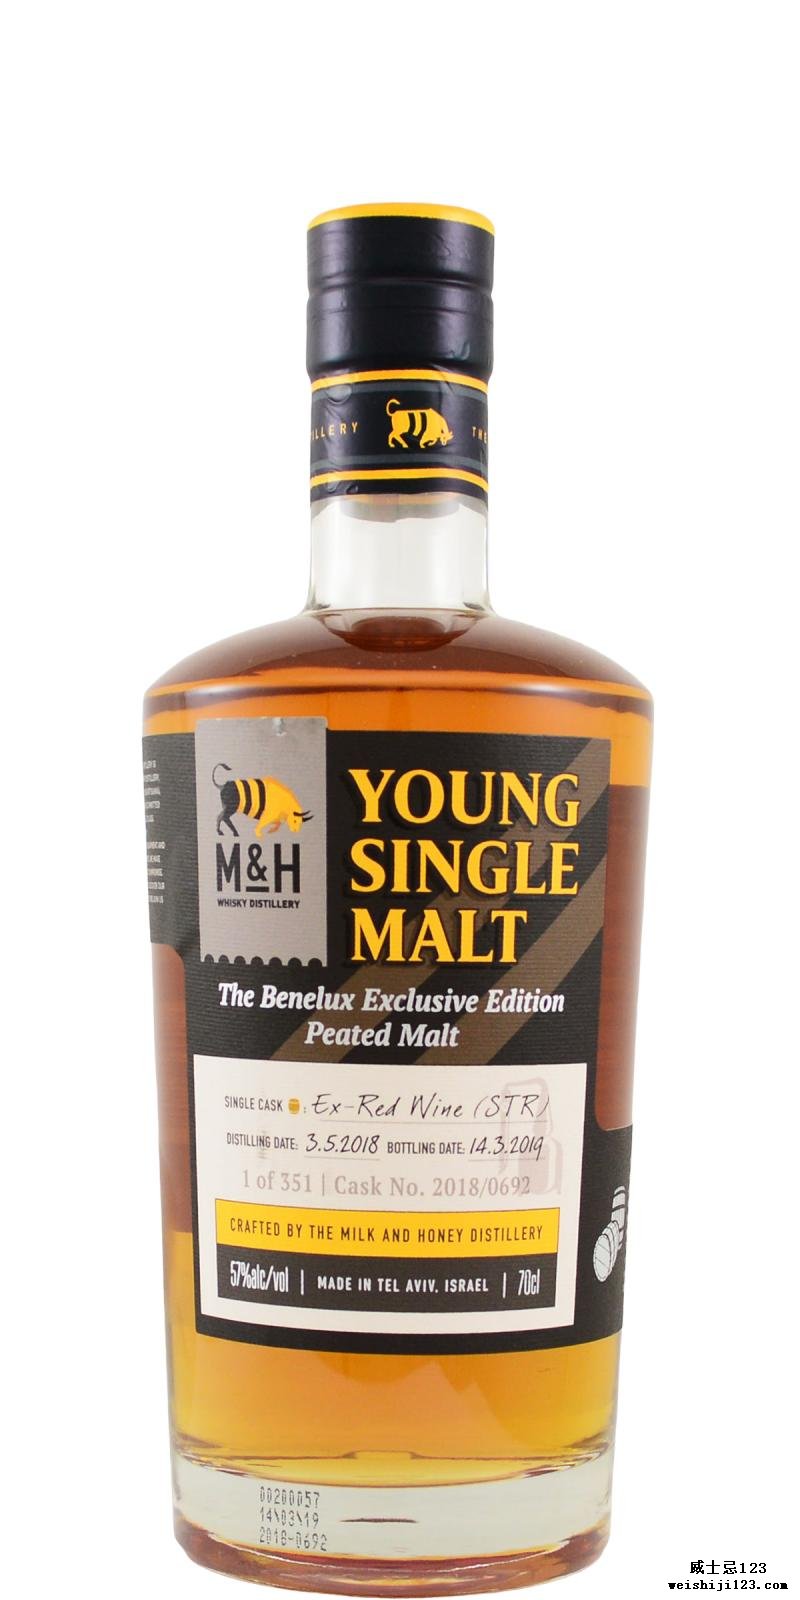 M&H Young Single Malt